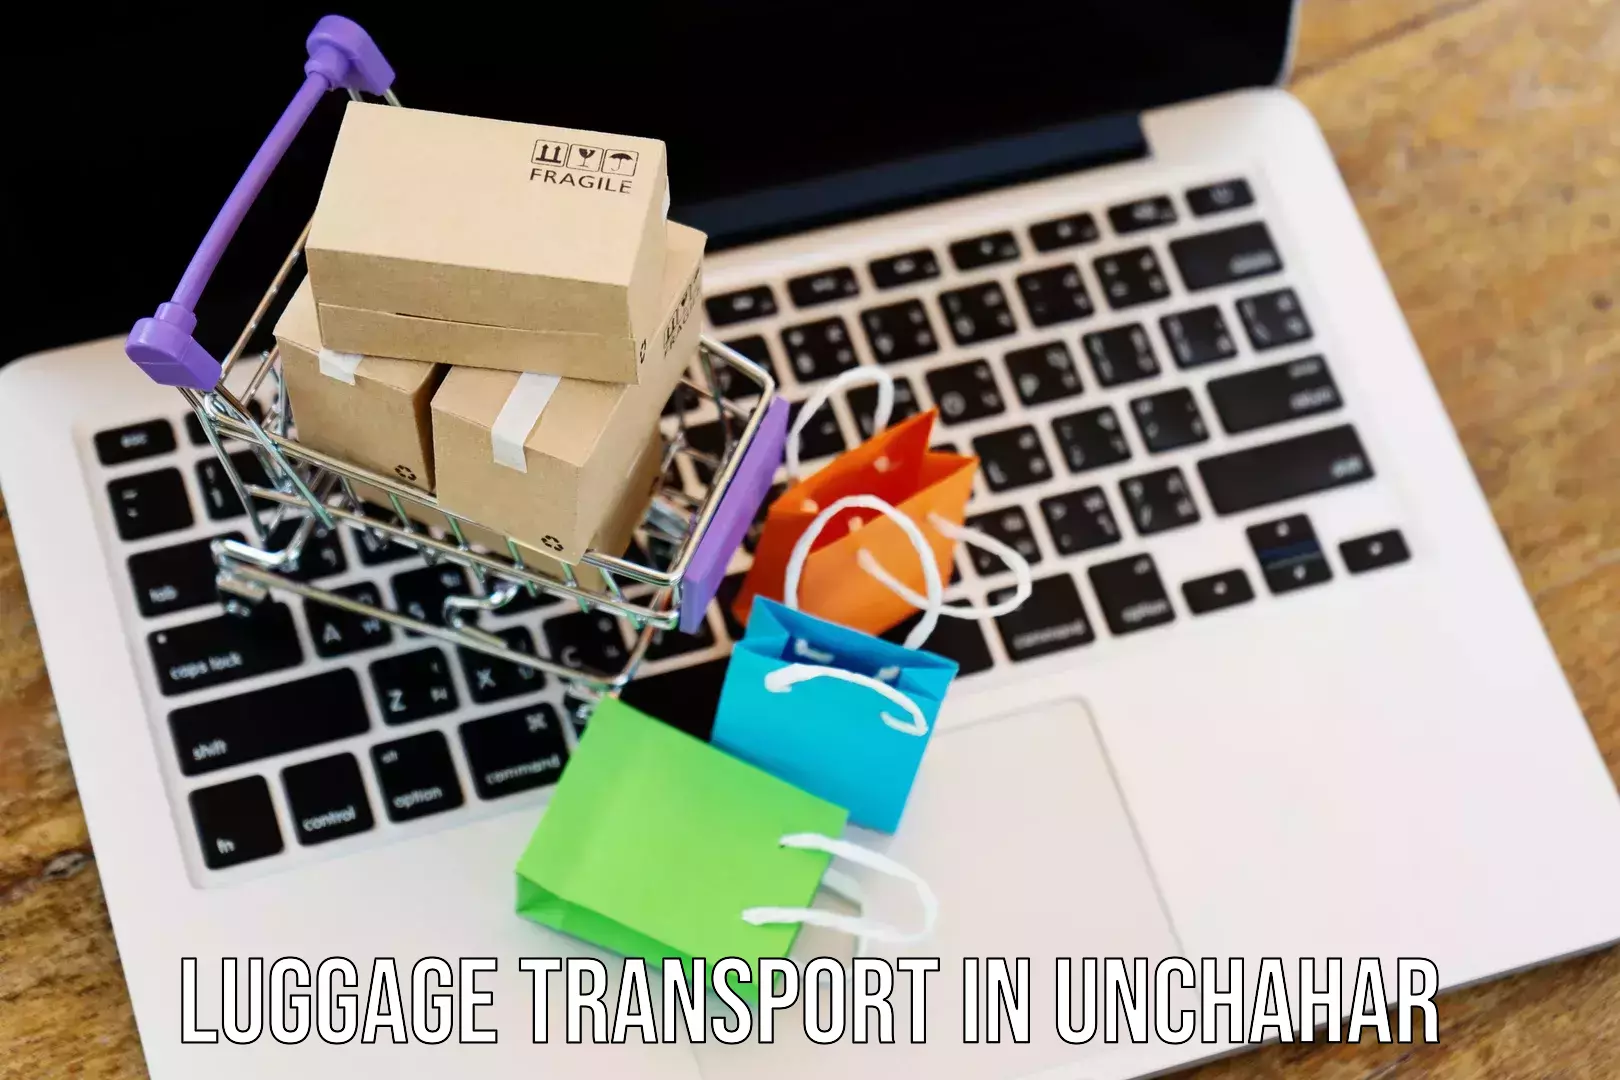 Luggage shipment logistics in Unchahar